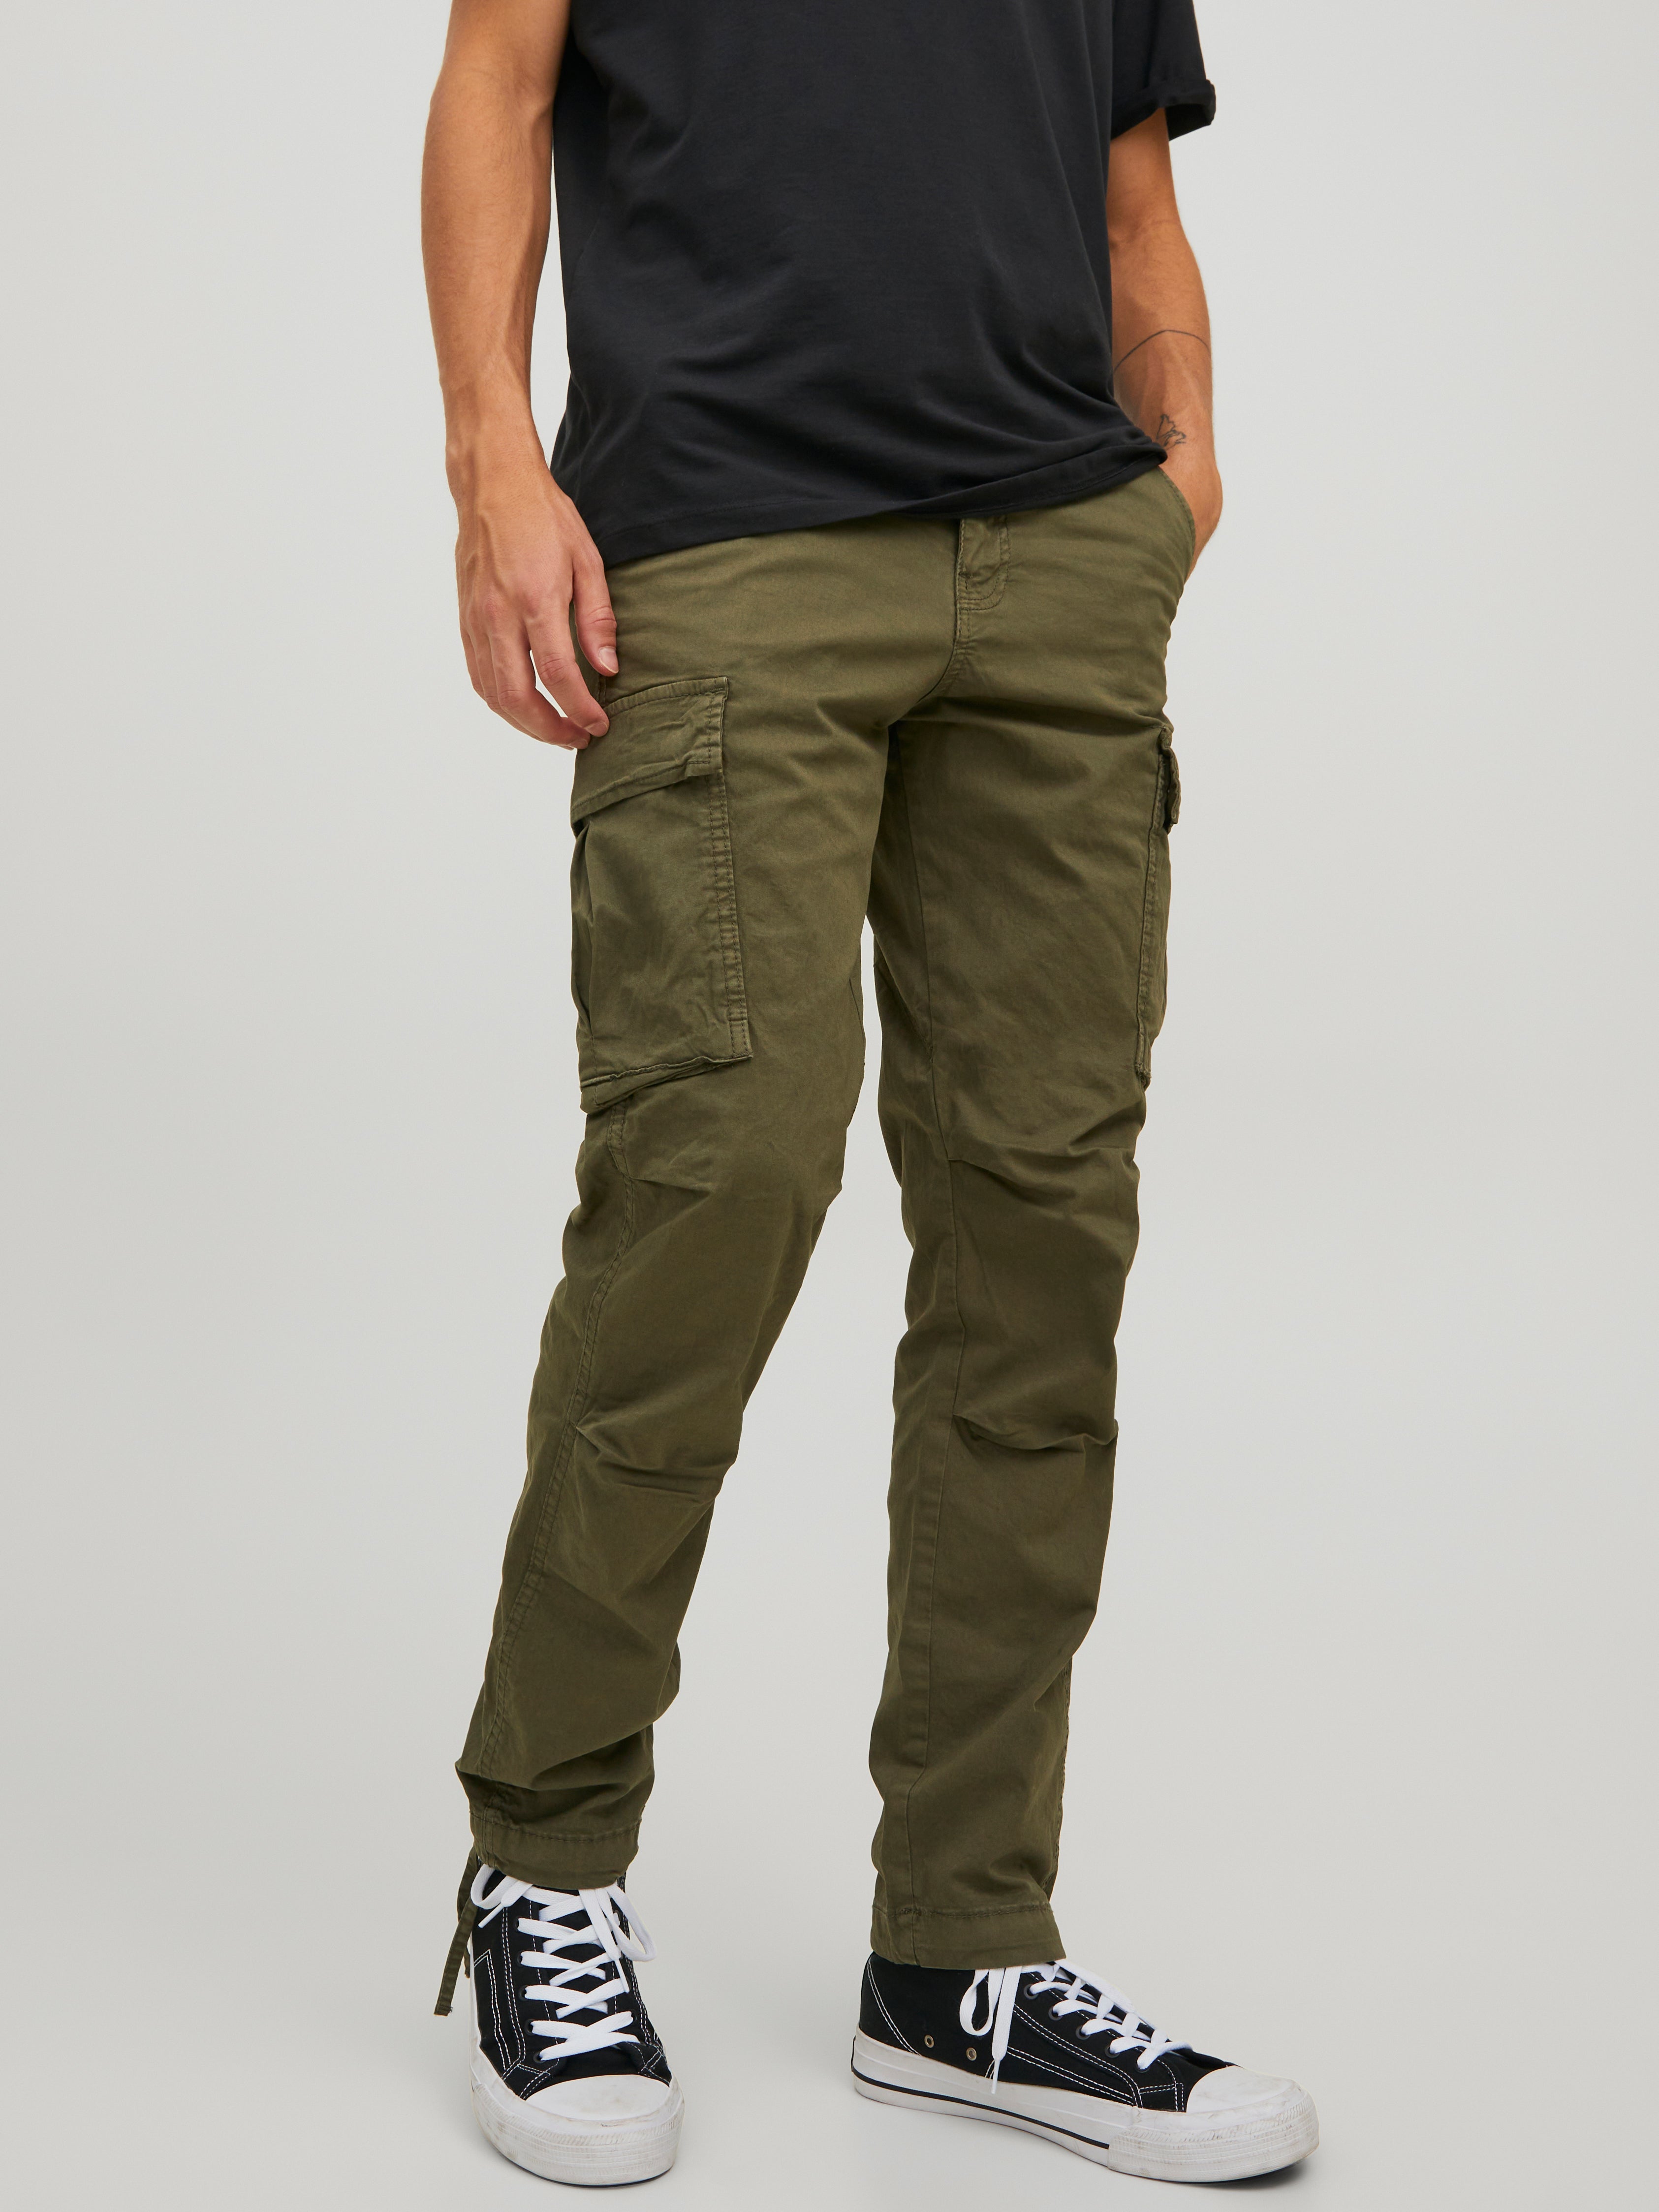 discount 56% MEN FASHION Trousers Shorts Brown XL Jack & Jones slacks 